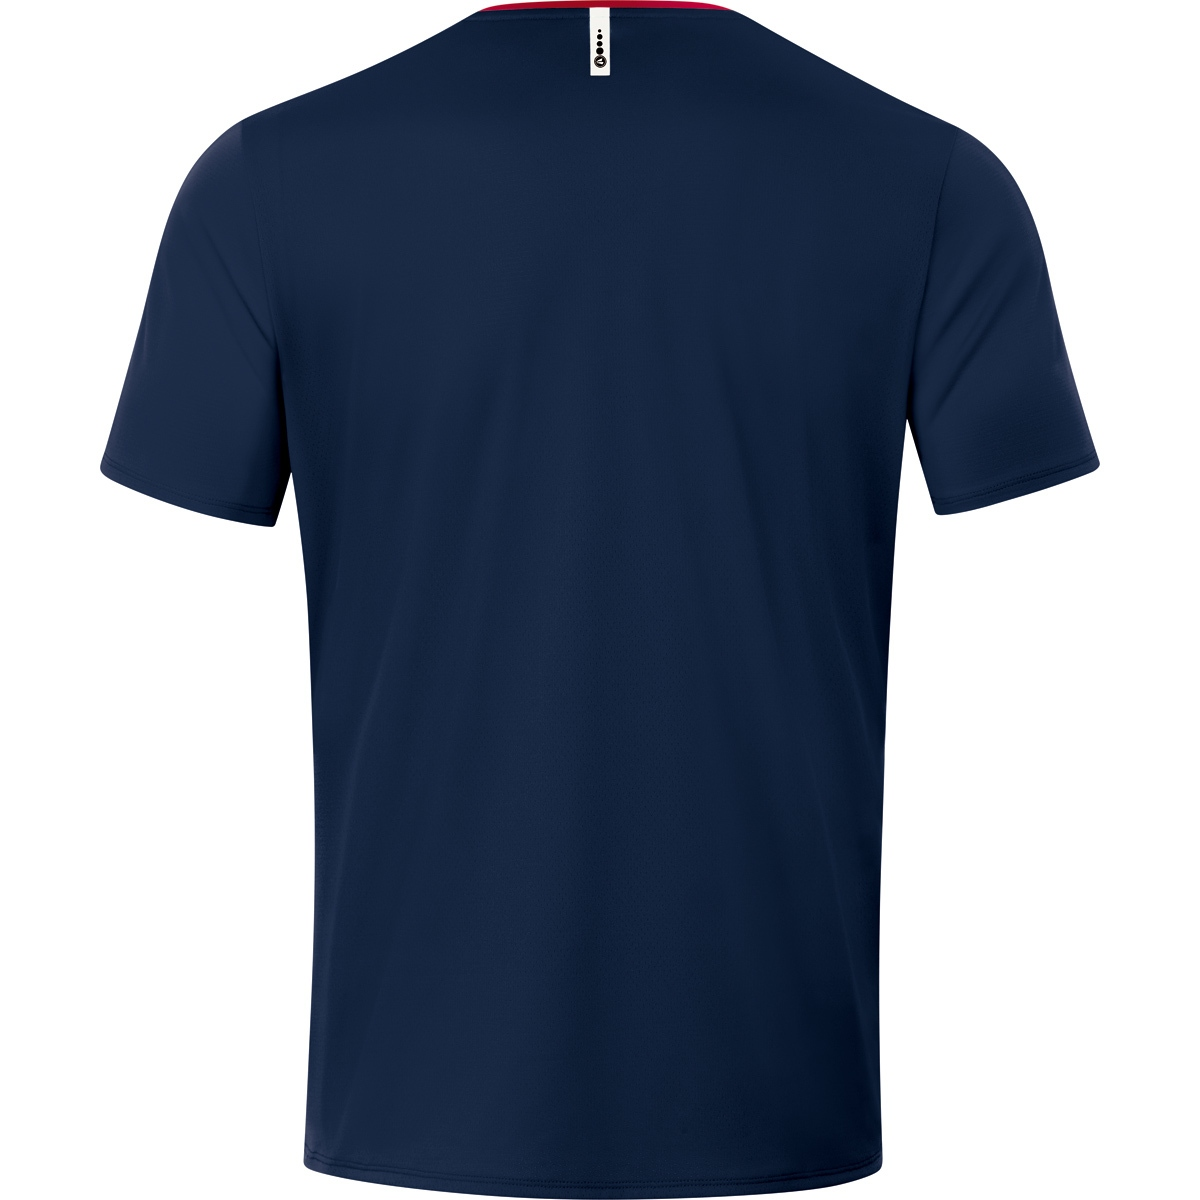 2.0 JAKO Kinder, rot, marine/chili 6120 116, Champ Gr. T-Shirt